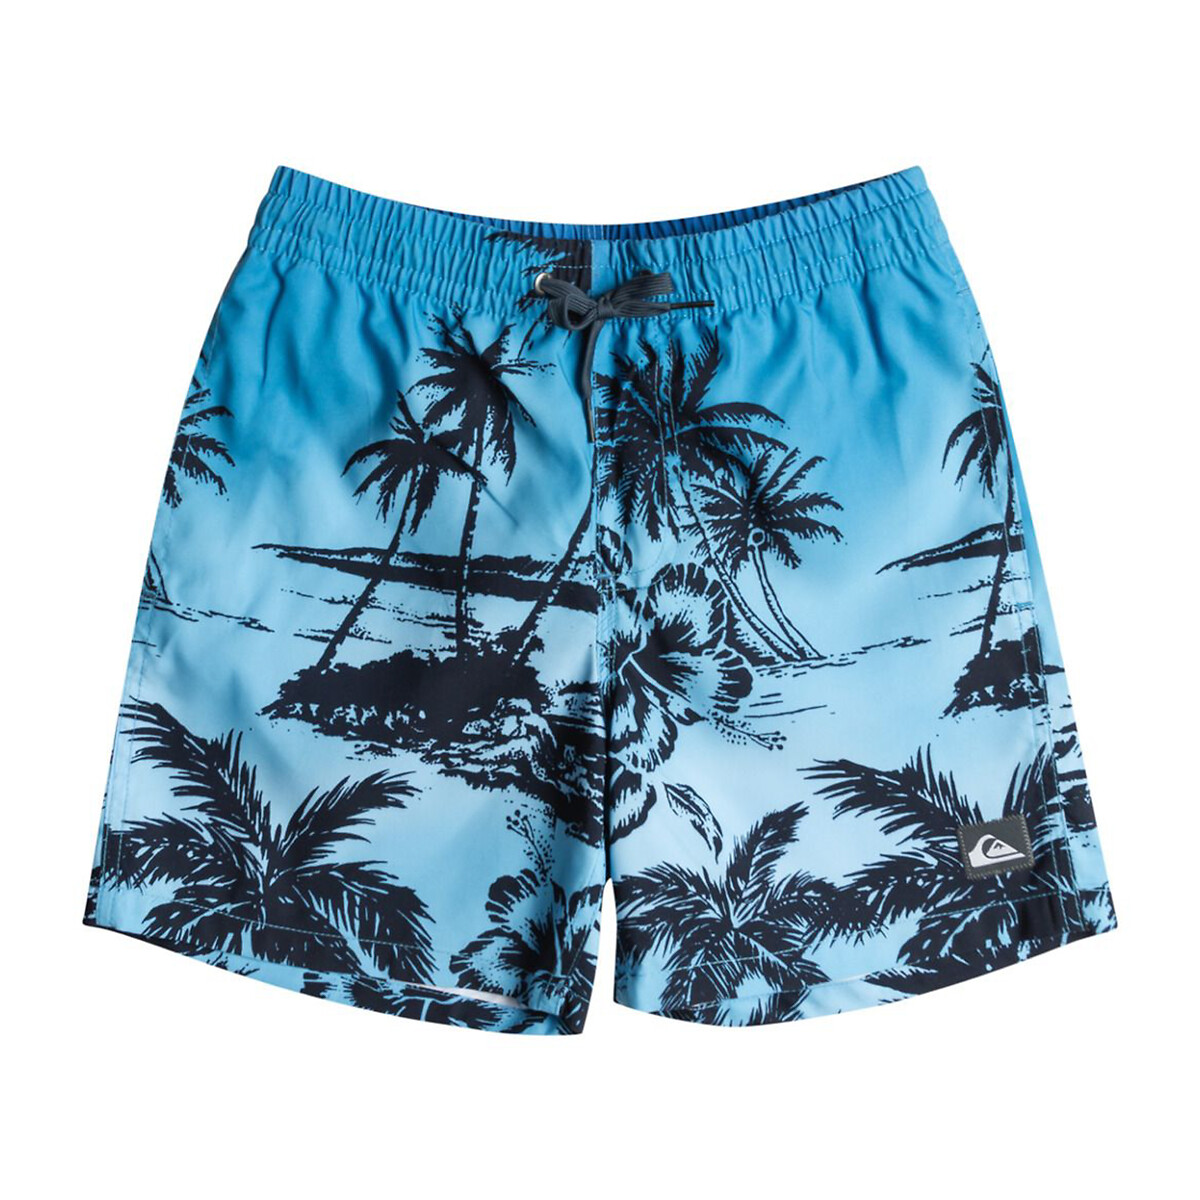 Recycled Swim Shorts in Hawaiian Print